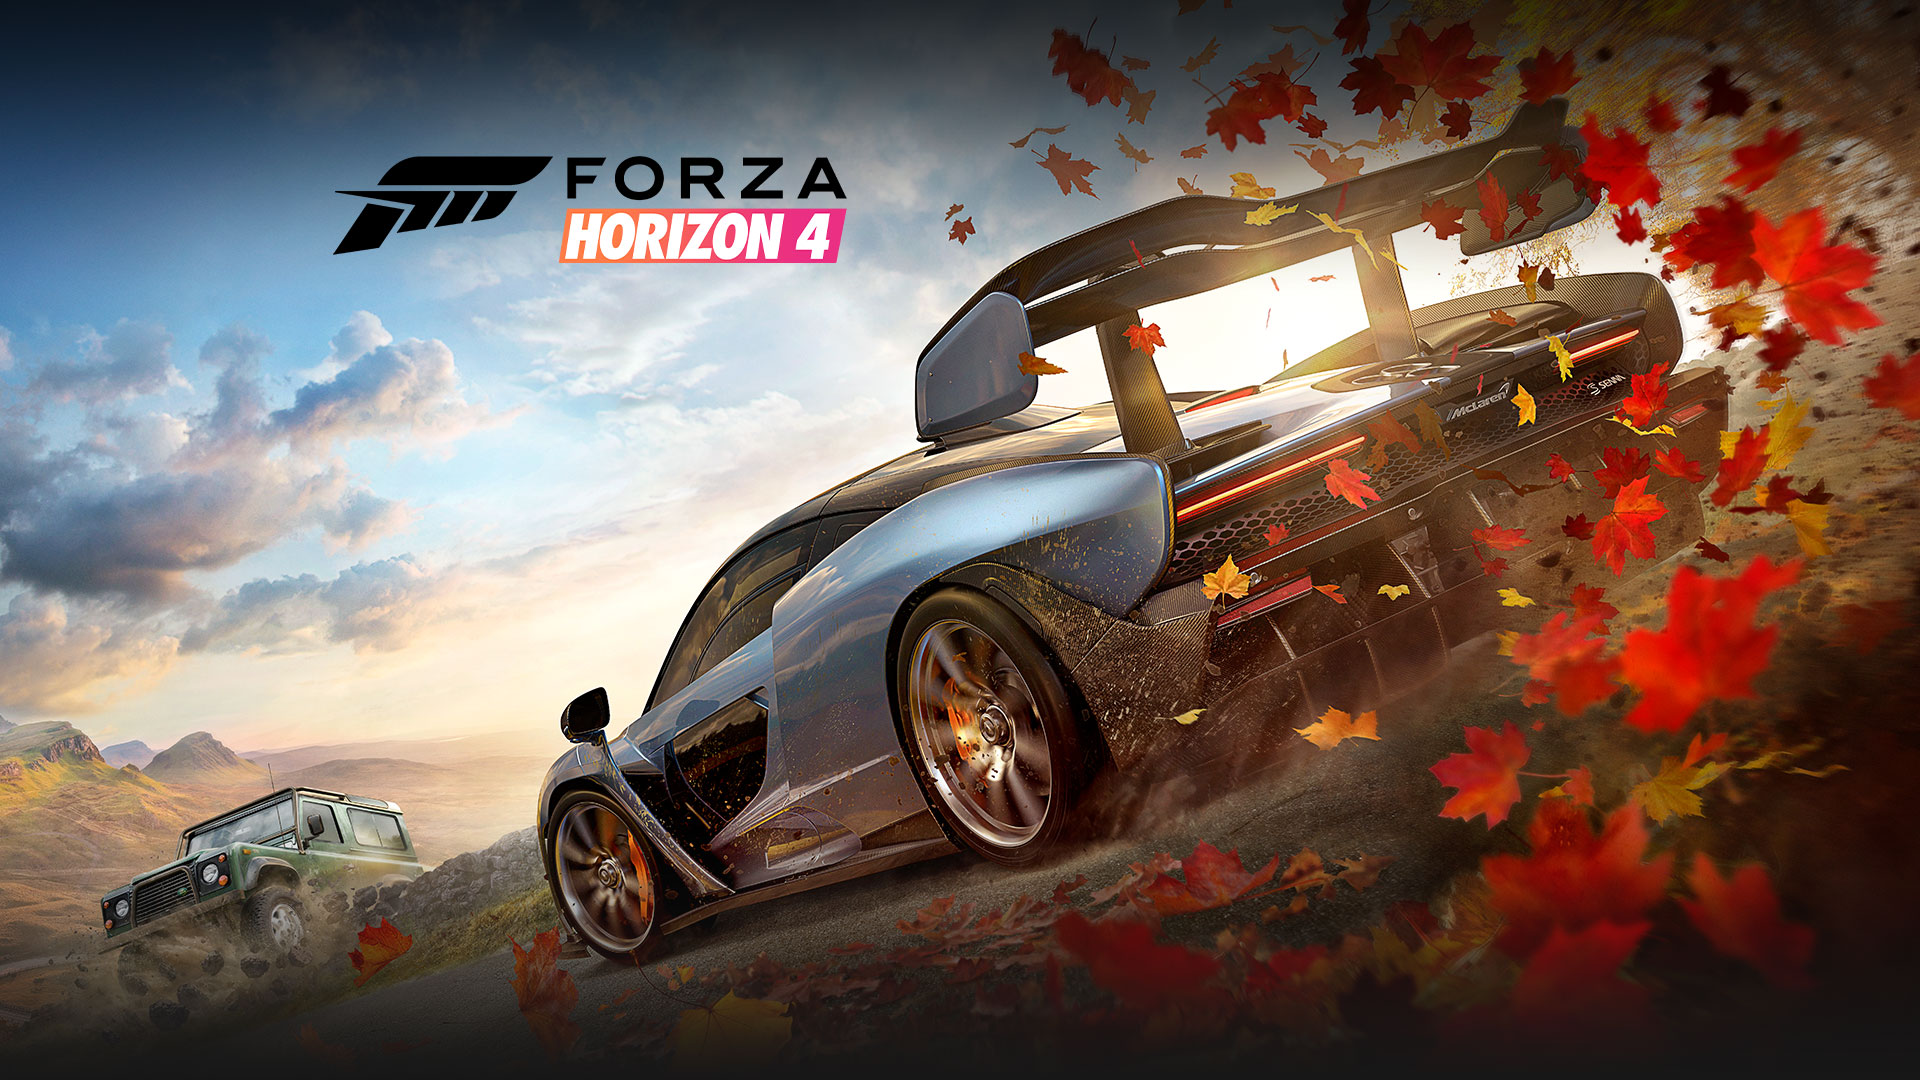 Forza Horizon 4, δύο αυτοκίνητα, το ένα από αυτά με φύλλα πίσω του